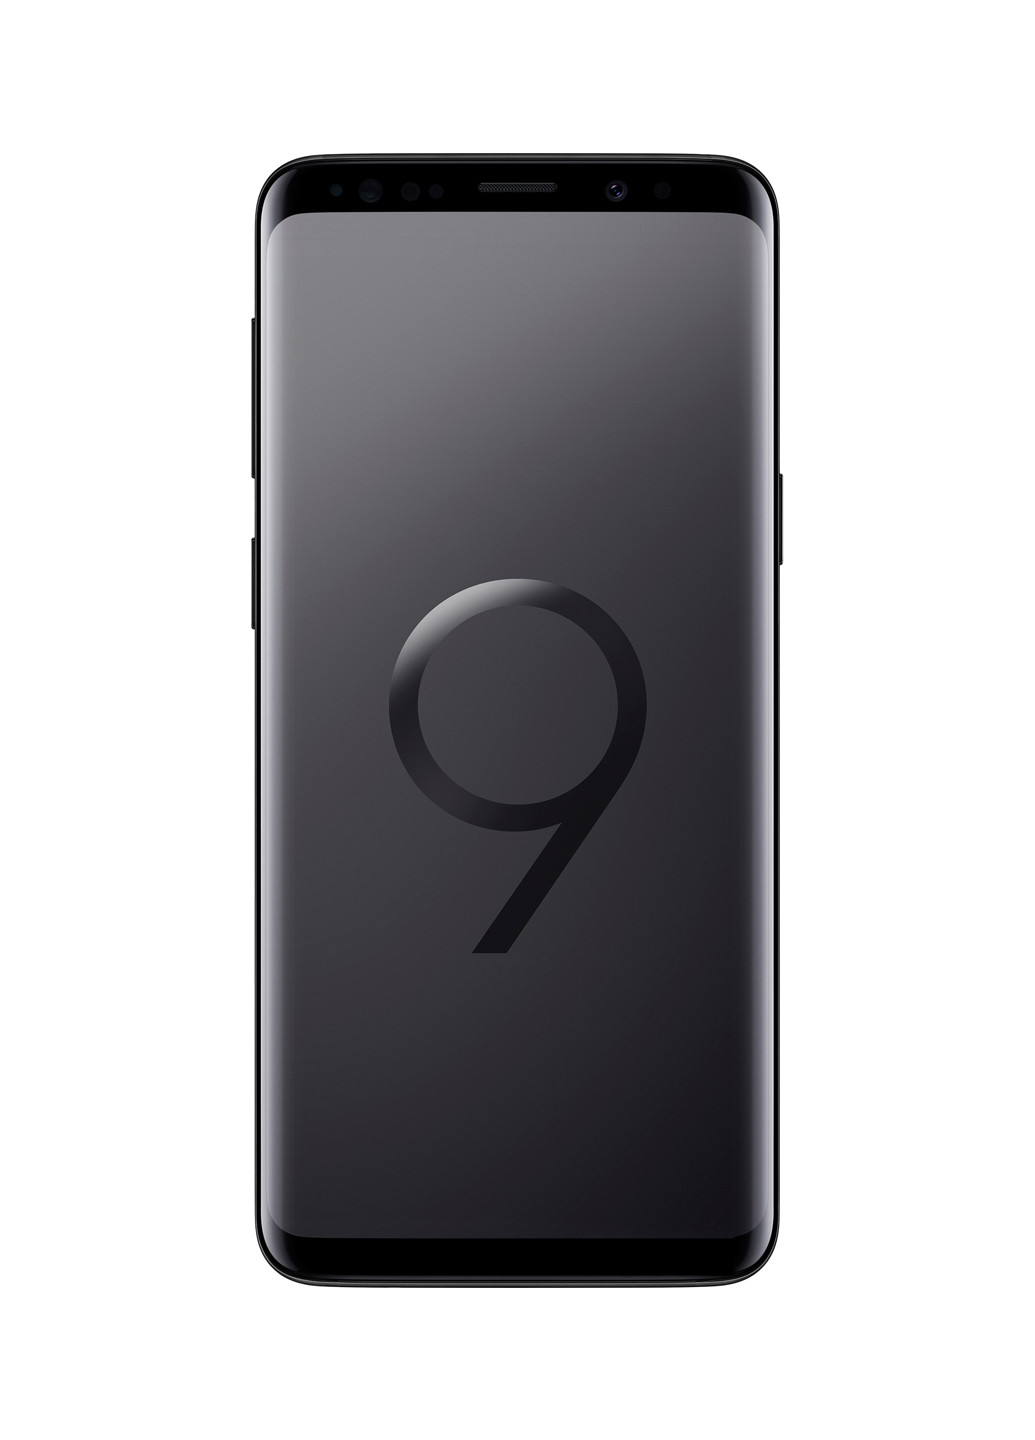 Смартфон Samsung galaxy s9 4/64gb black (sm-g960fzkdsek) (130349389)